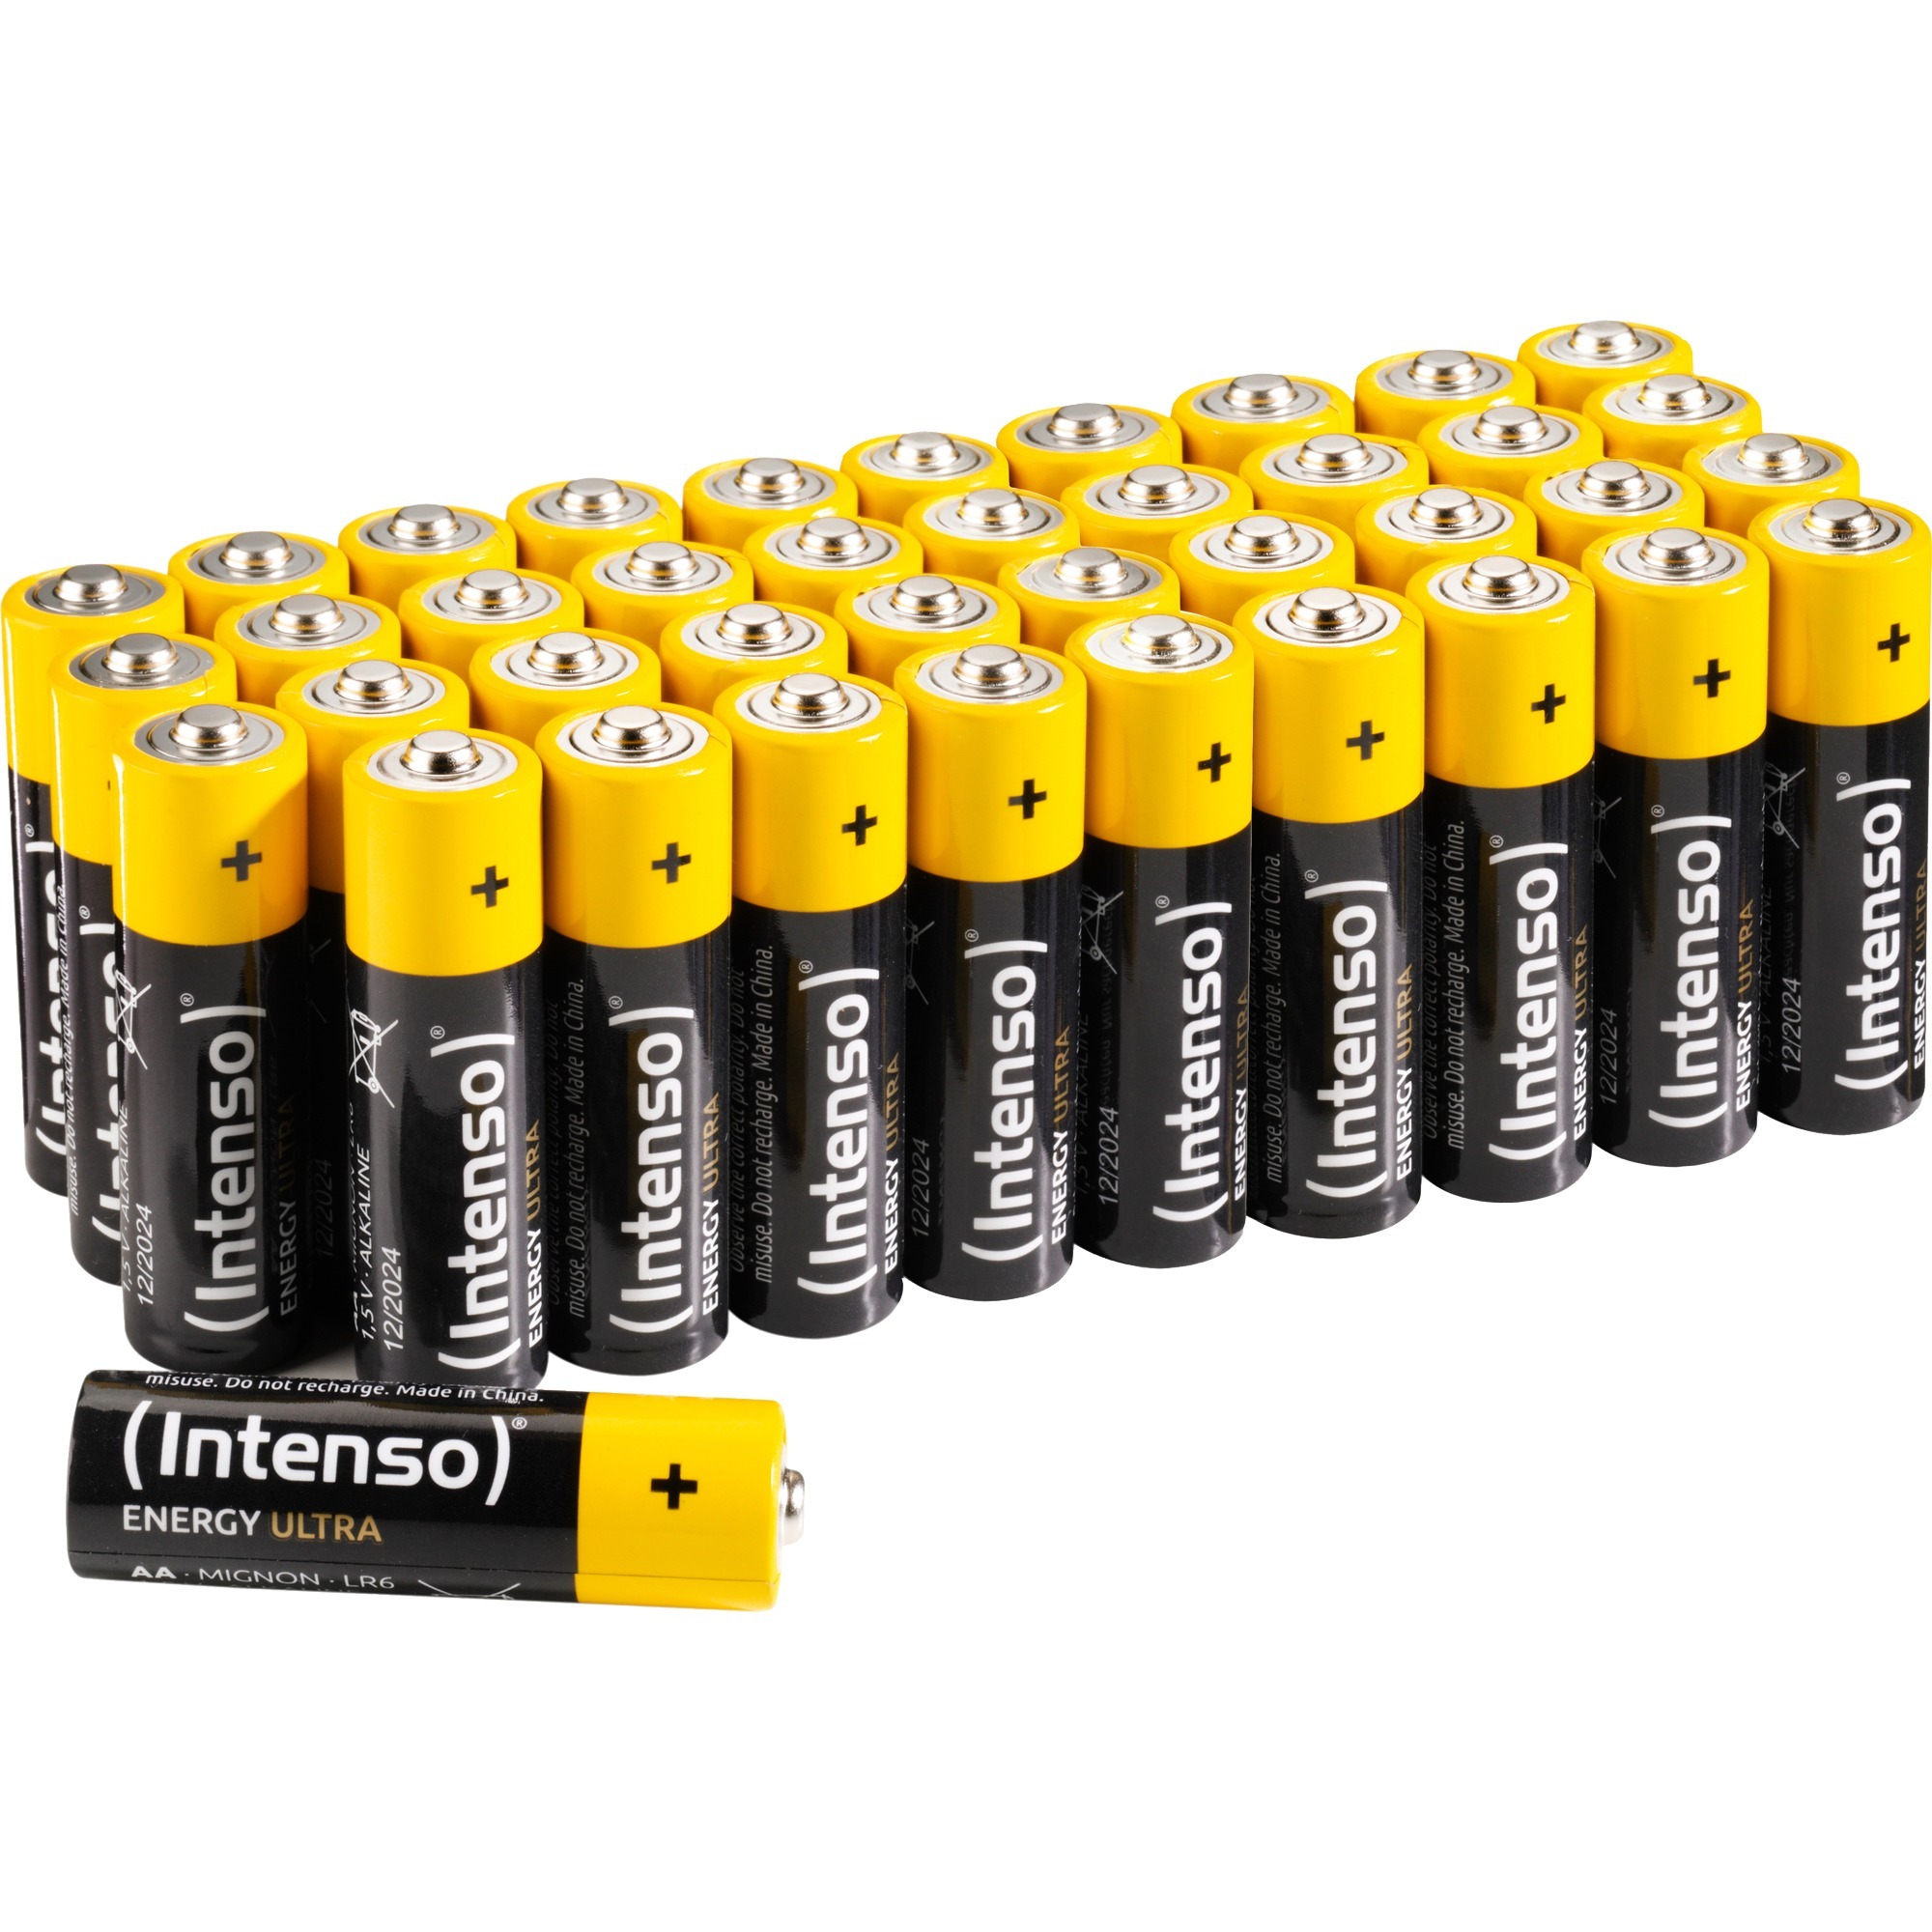 Image of Alternate - Energy Ultra AA LR06, Batterie online einkaufen bei Alternate